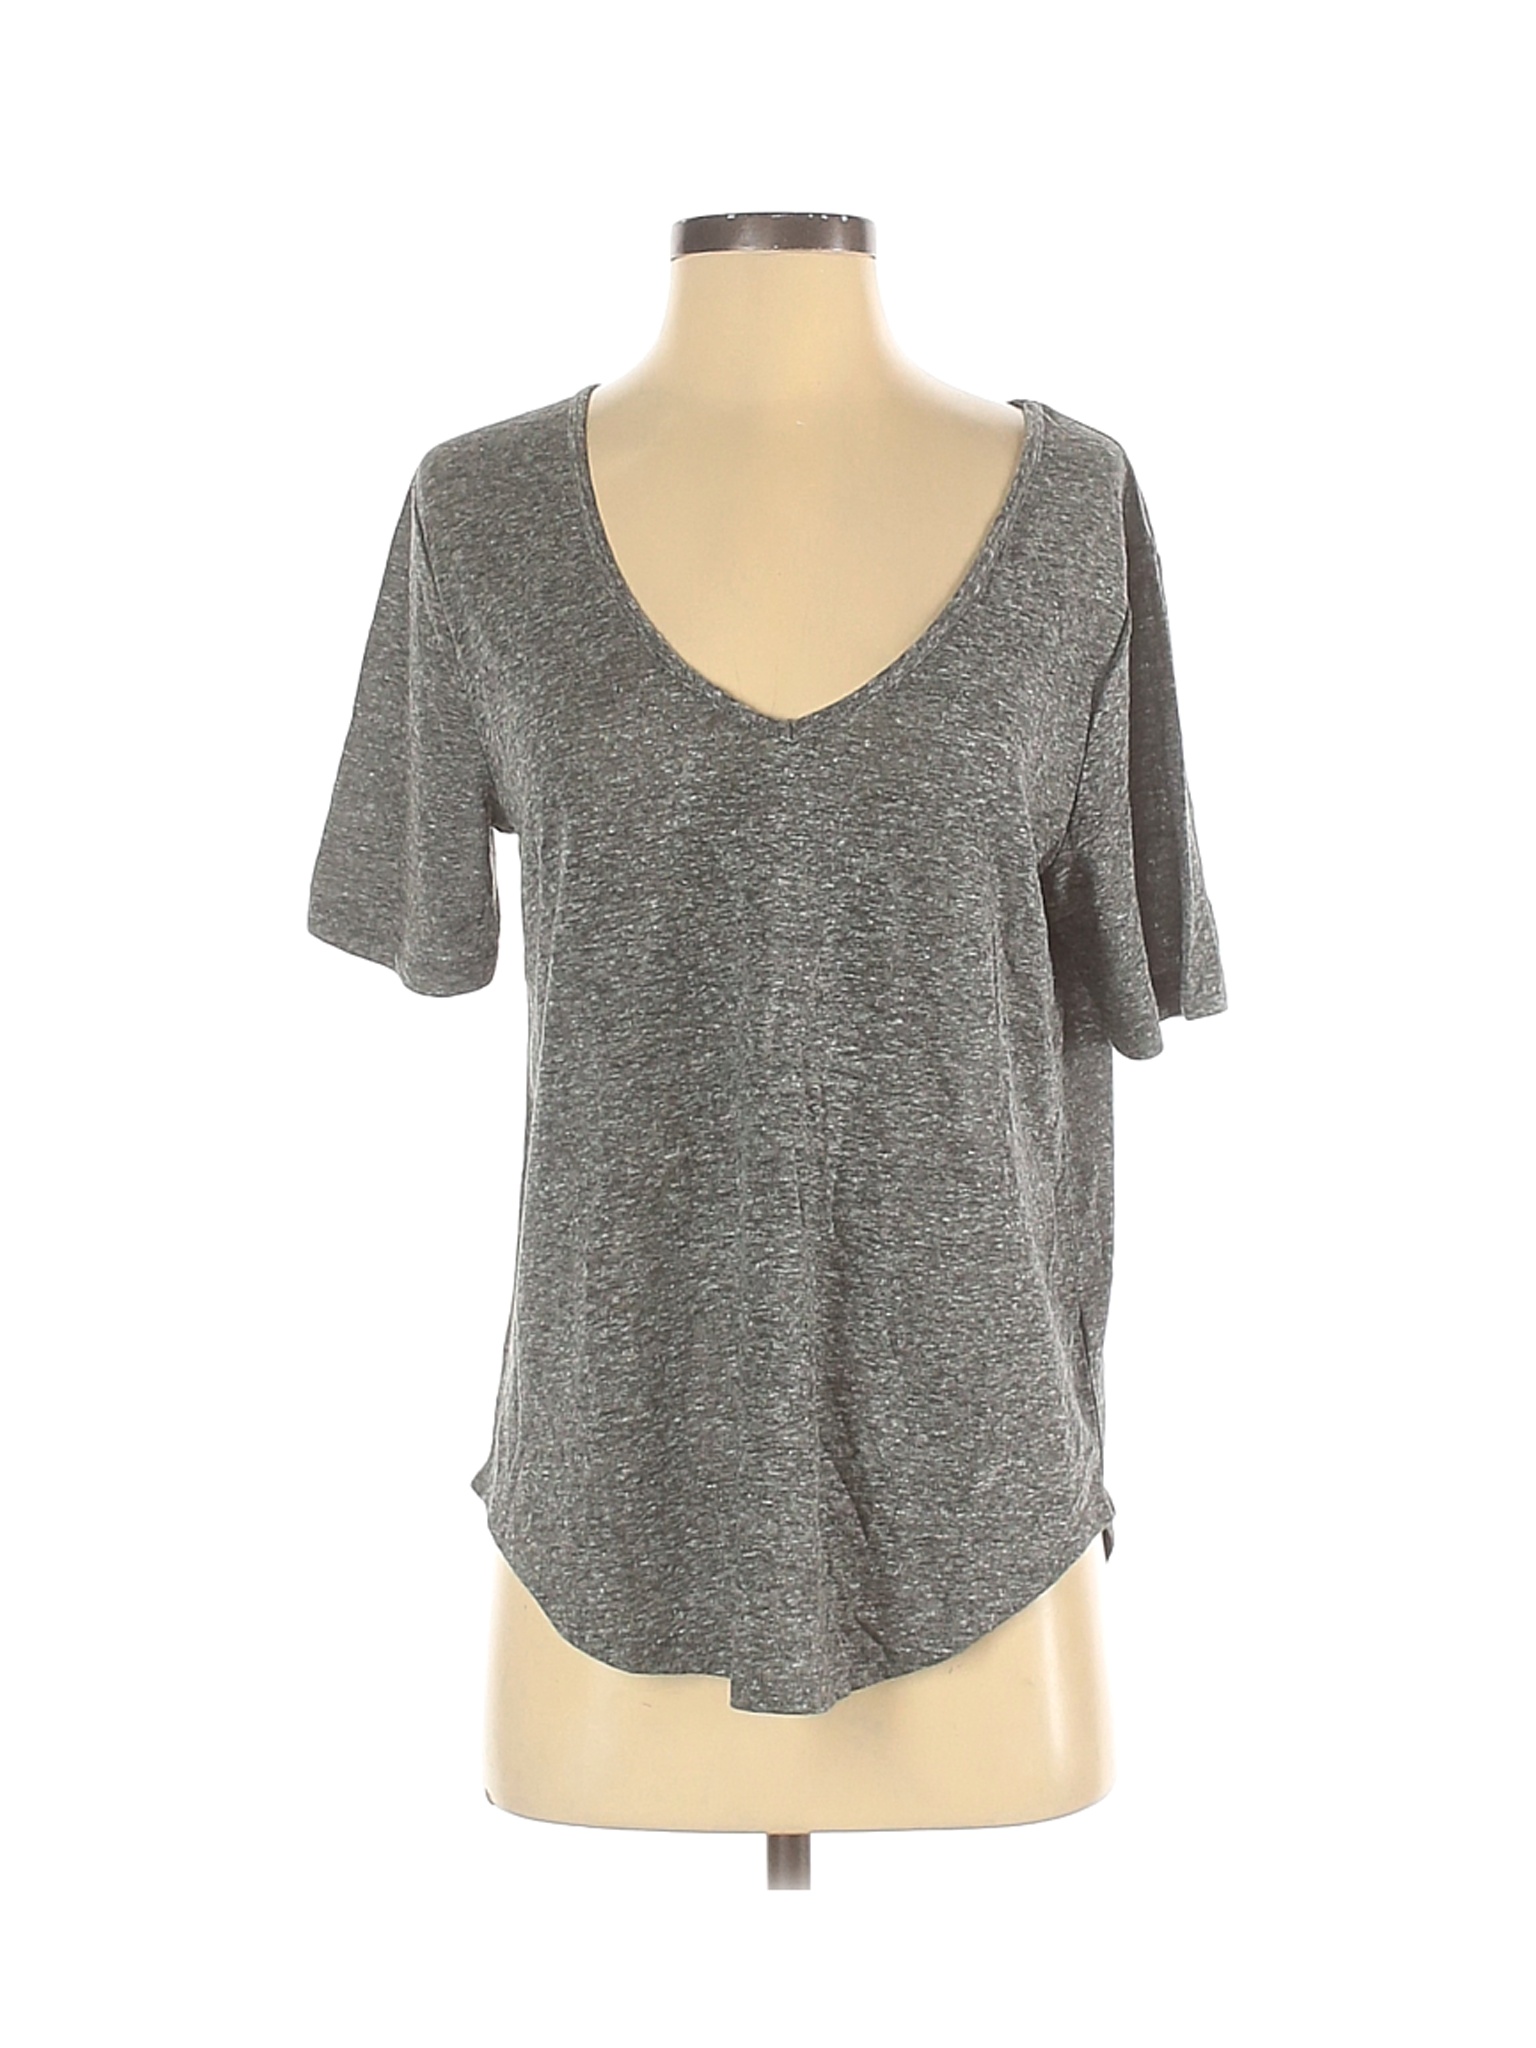 Old Navy Women Gray Short Sleeve T-Shirt S | eBay